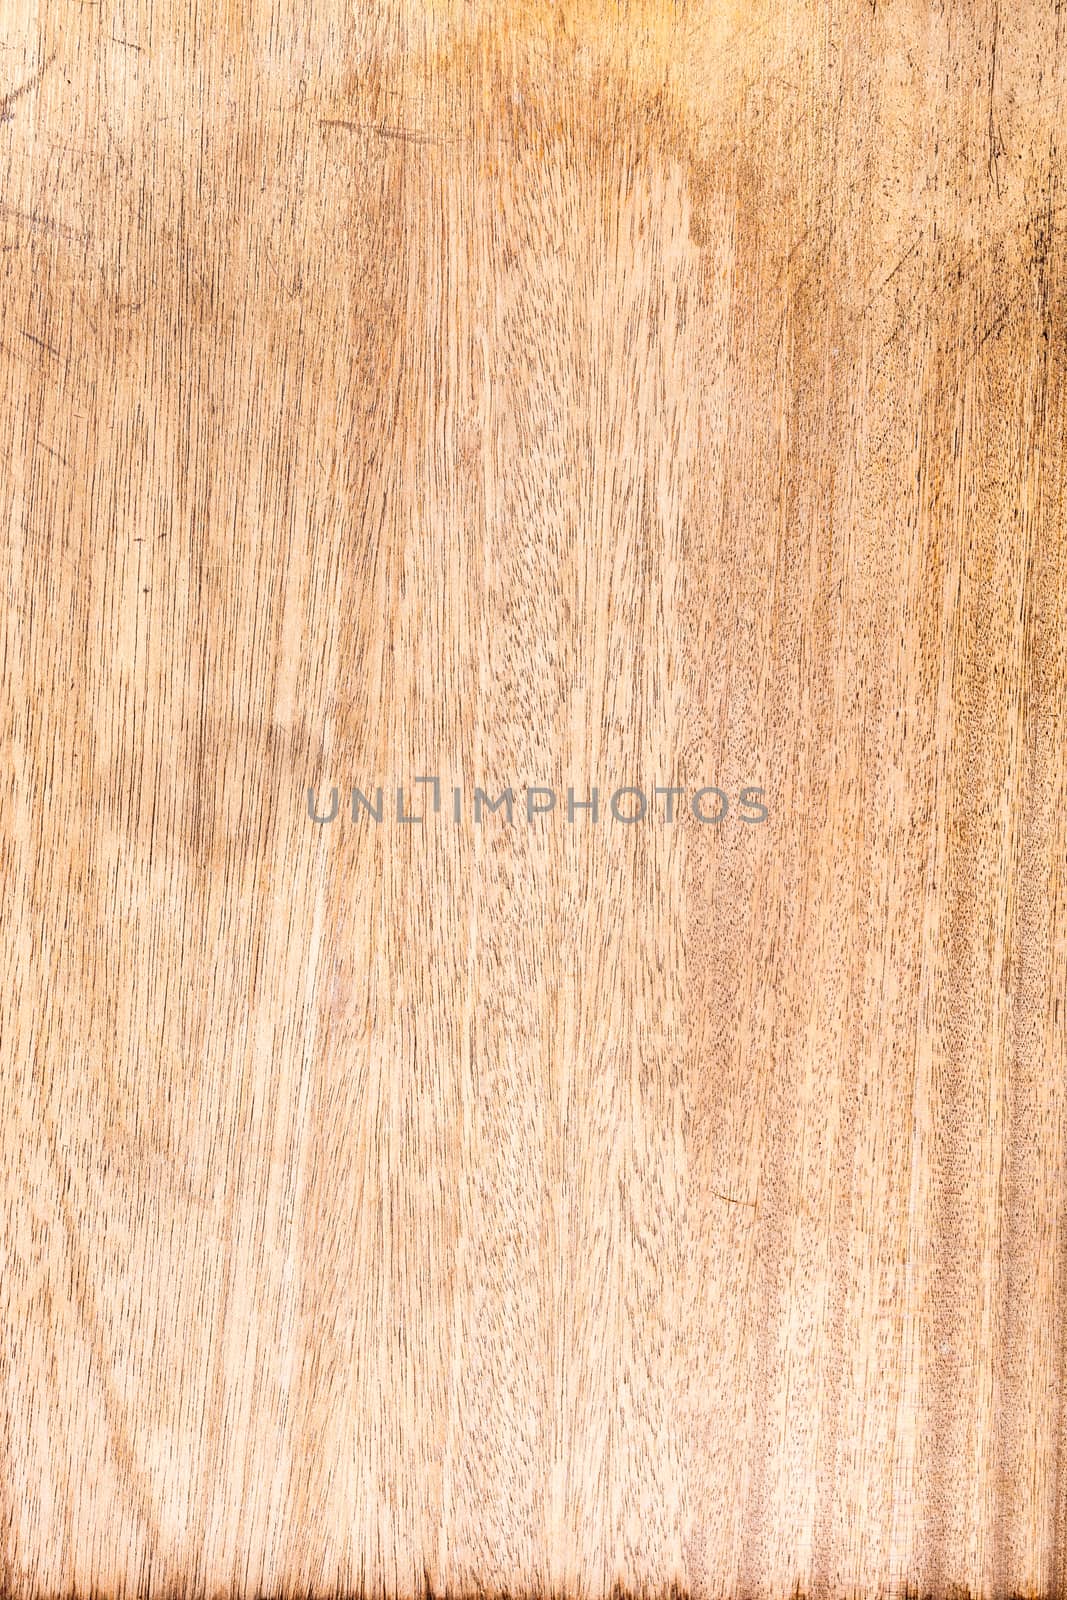 High resolution vintage natural woodgrain texture by nopparats